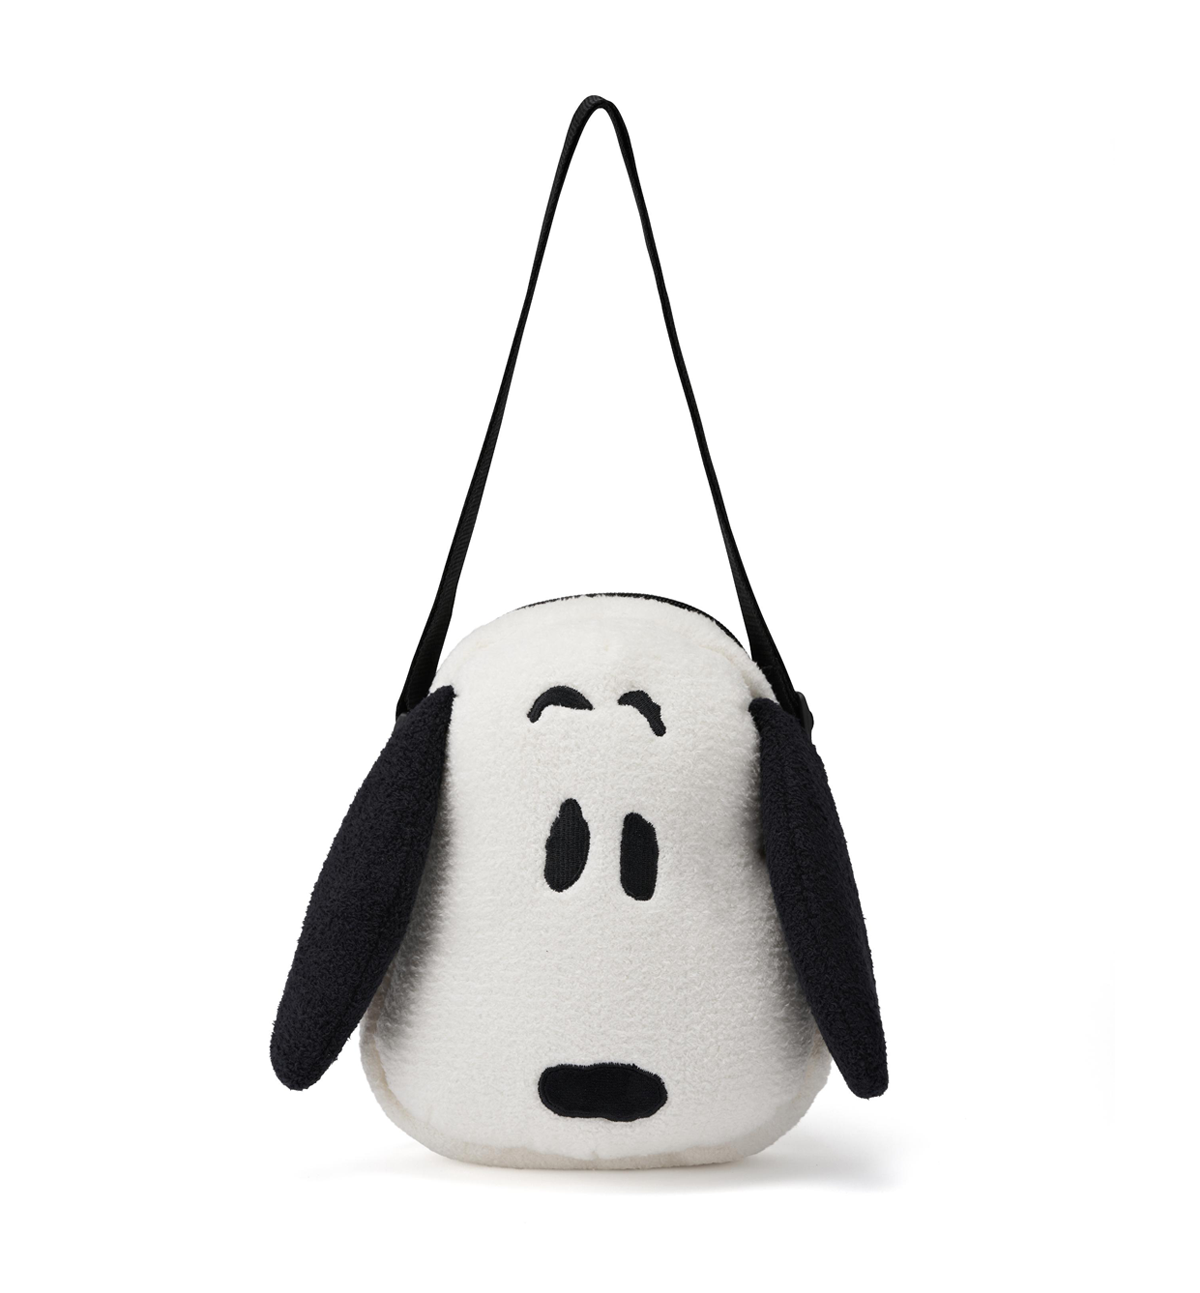 Peanuts Snoopy Cross Body Bag